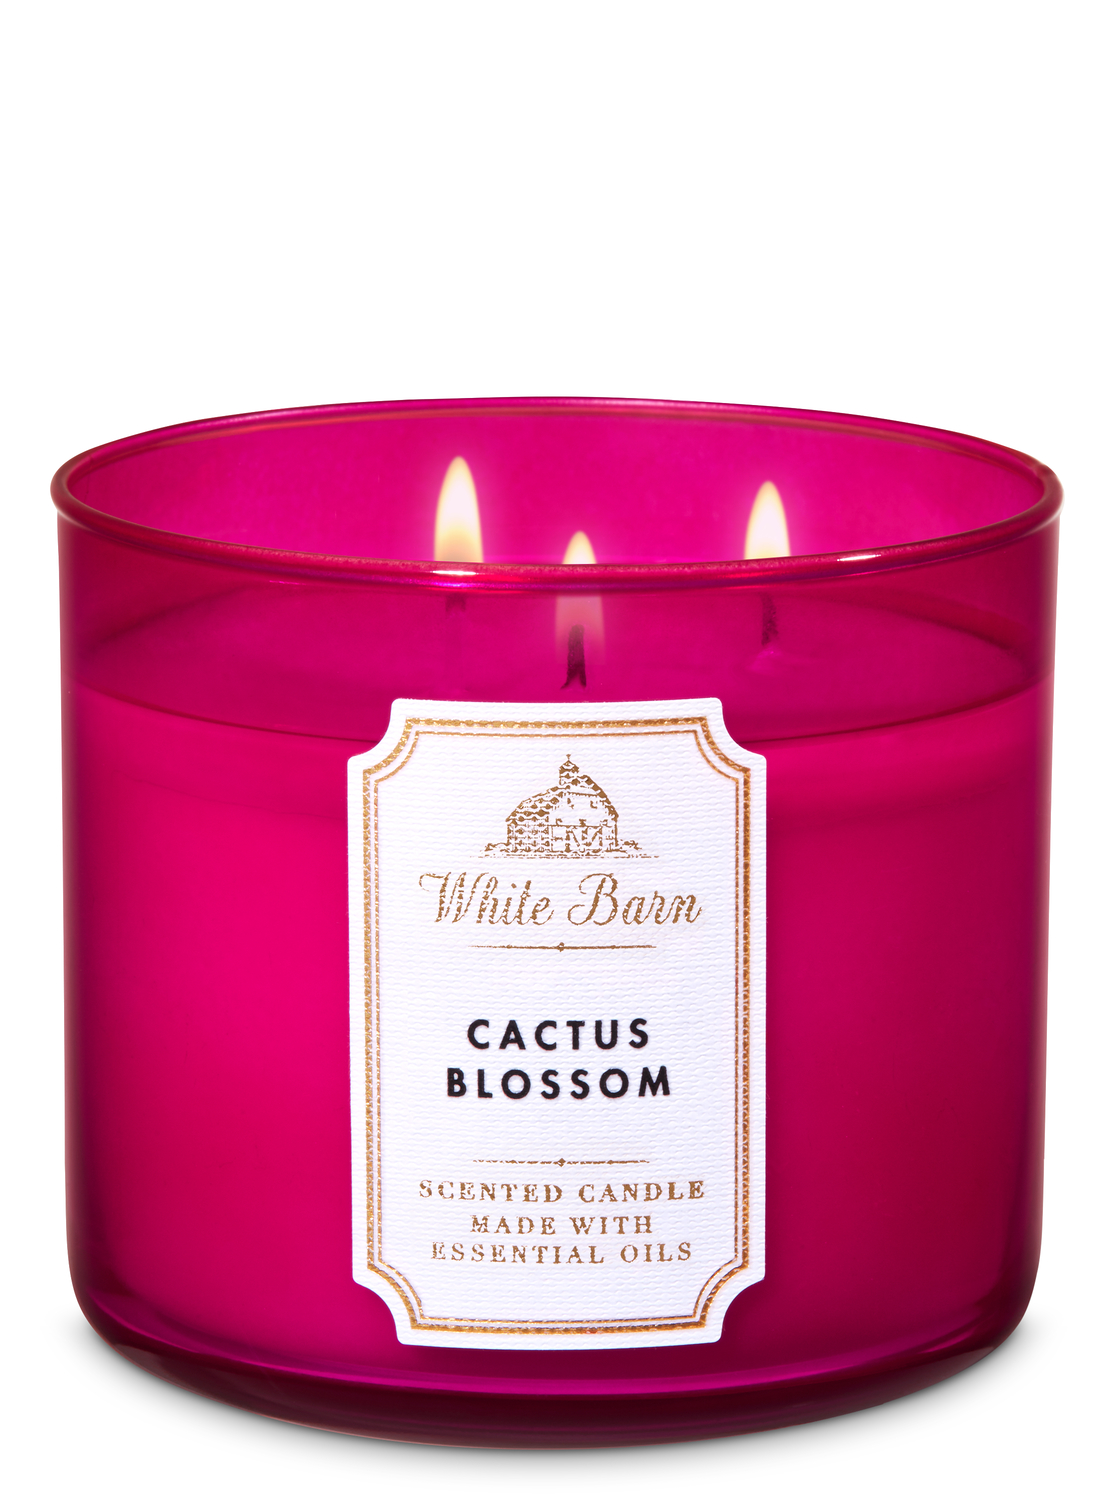 Cactus Blossom 3Wick Candle Bath & Body Works Australia Official Site